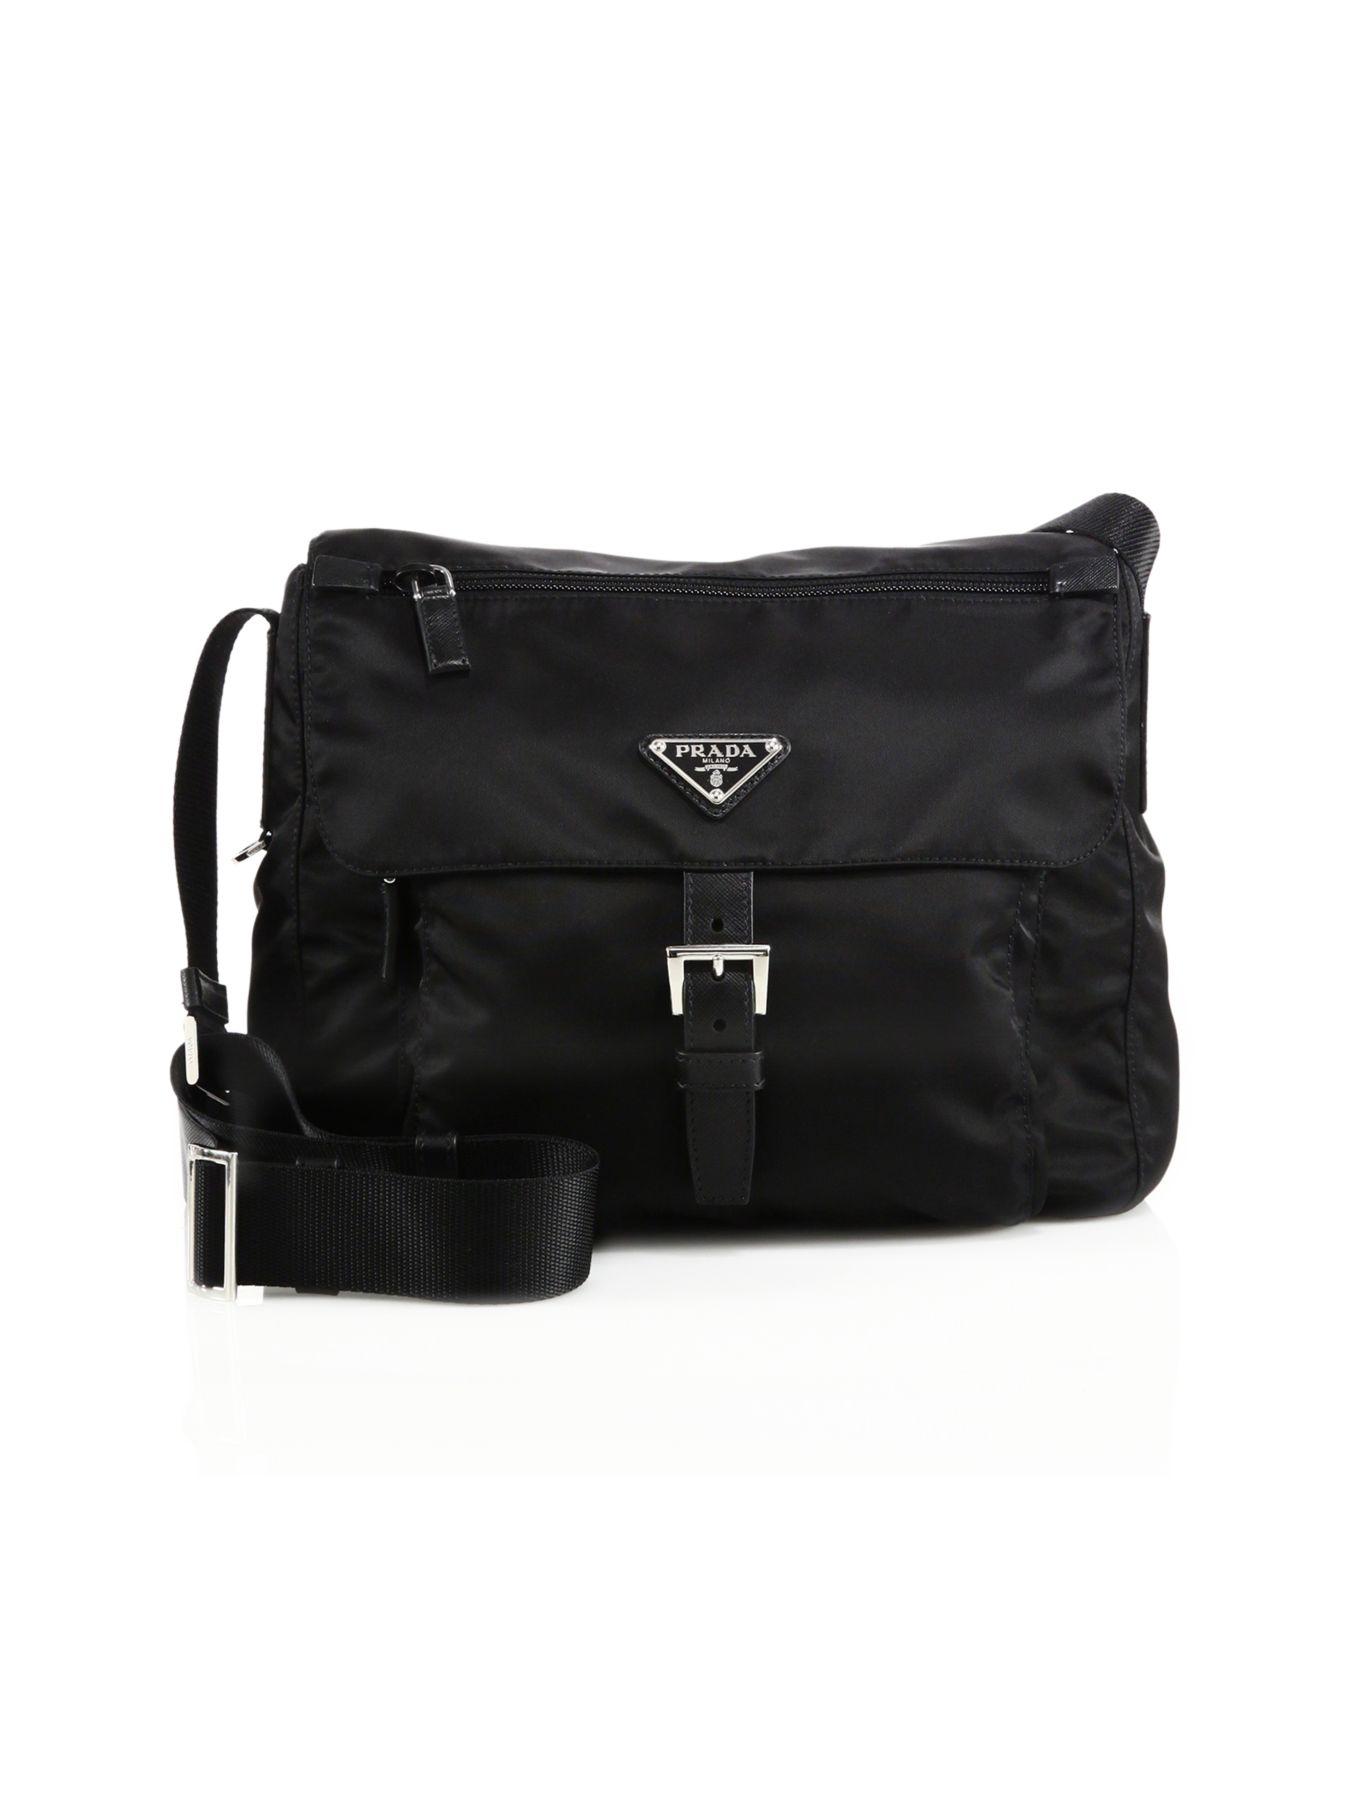 Prada Synthetic Small Nylon Crossbody Bag in Black - Save 6% - Lyst